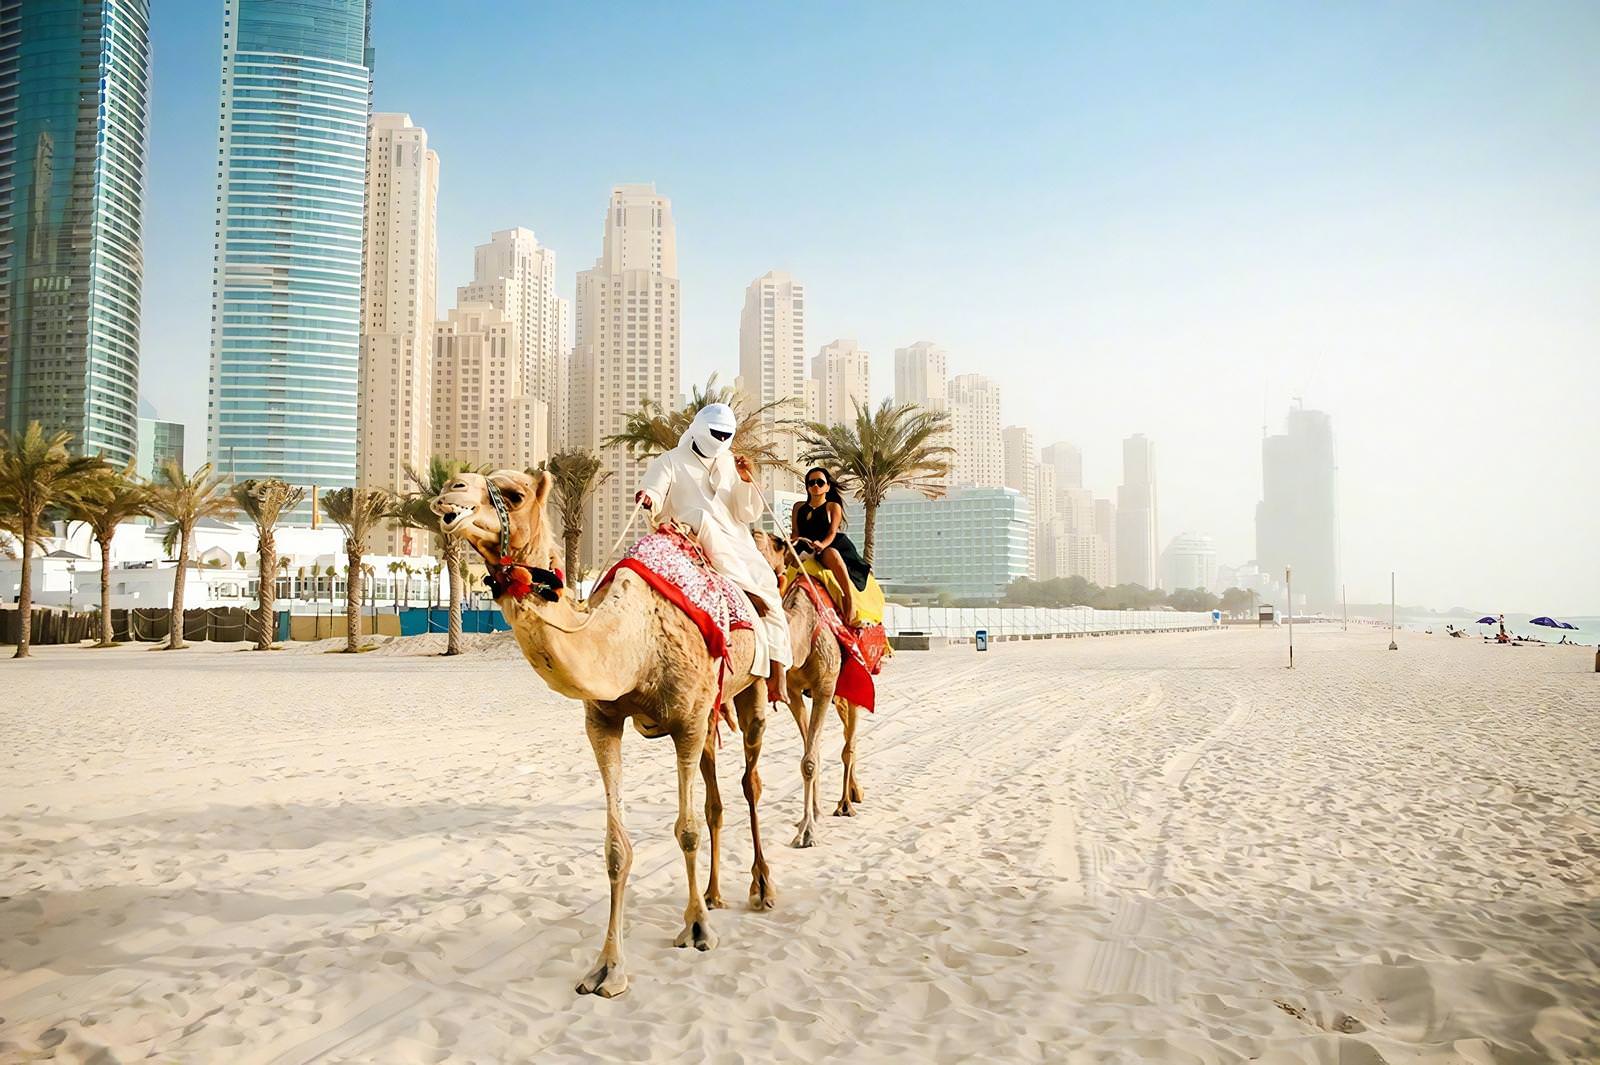 Дубайский сайт. Объединенные арабские эмираты (ОАЭ). Парк пустыни Шарджи. Абу-Даби (эммират). Сафари Абу Даби.